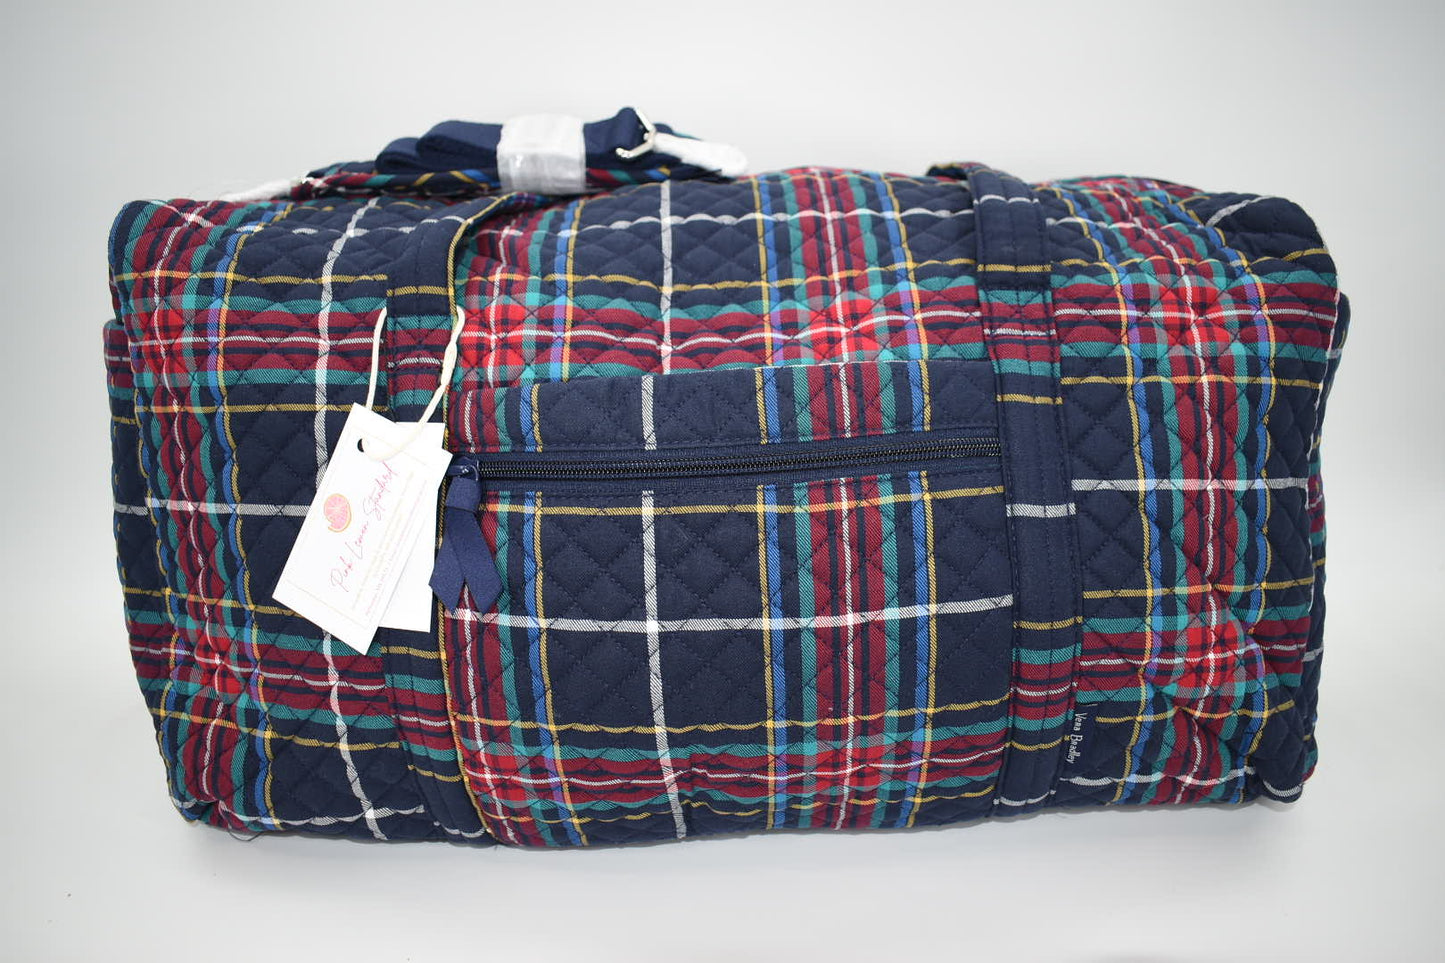 Vera Bradley Large Travel Duffel Bag in "Tartan Plaid" Pattern